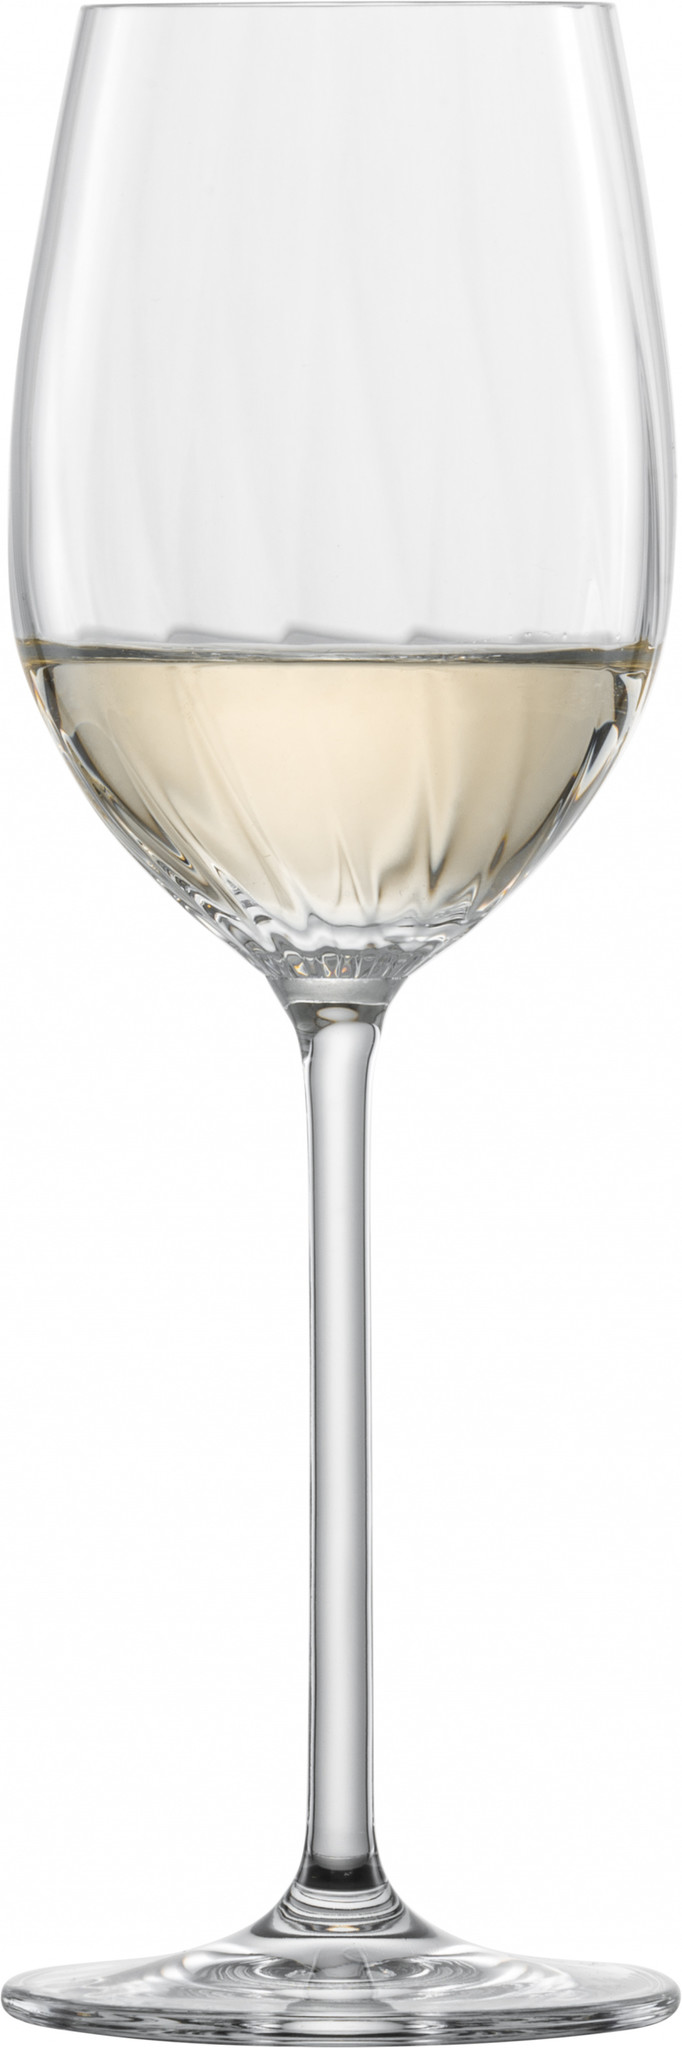 Zwiesel Glas Zwiesel Glas Prizma Witte wijnglas 2 - 0.296 Ltr - Geschenkverpakking 2 glazen